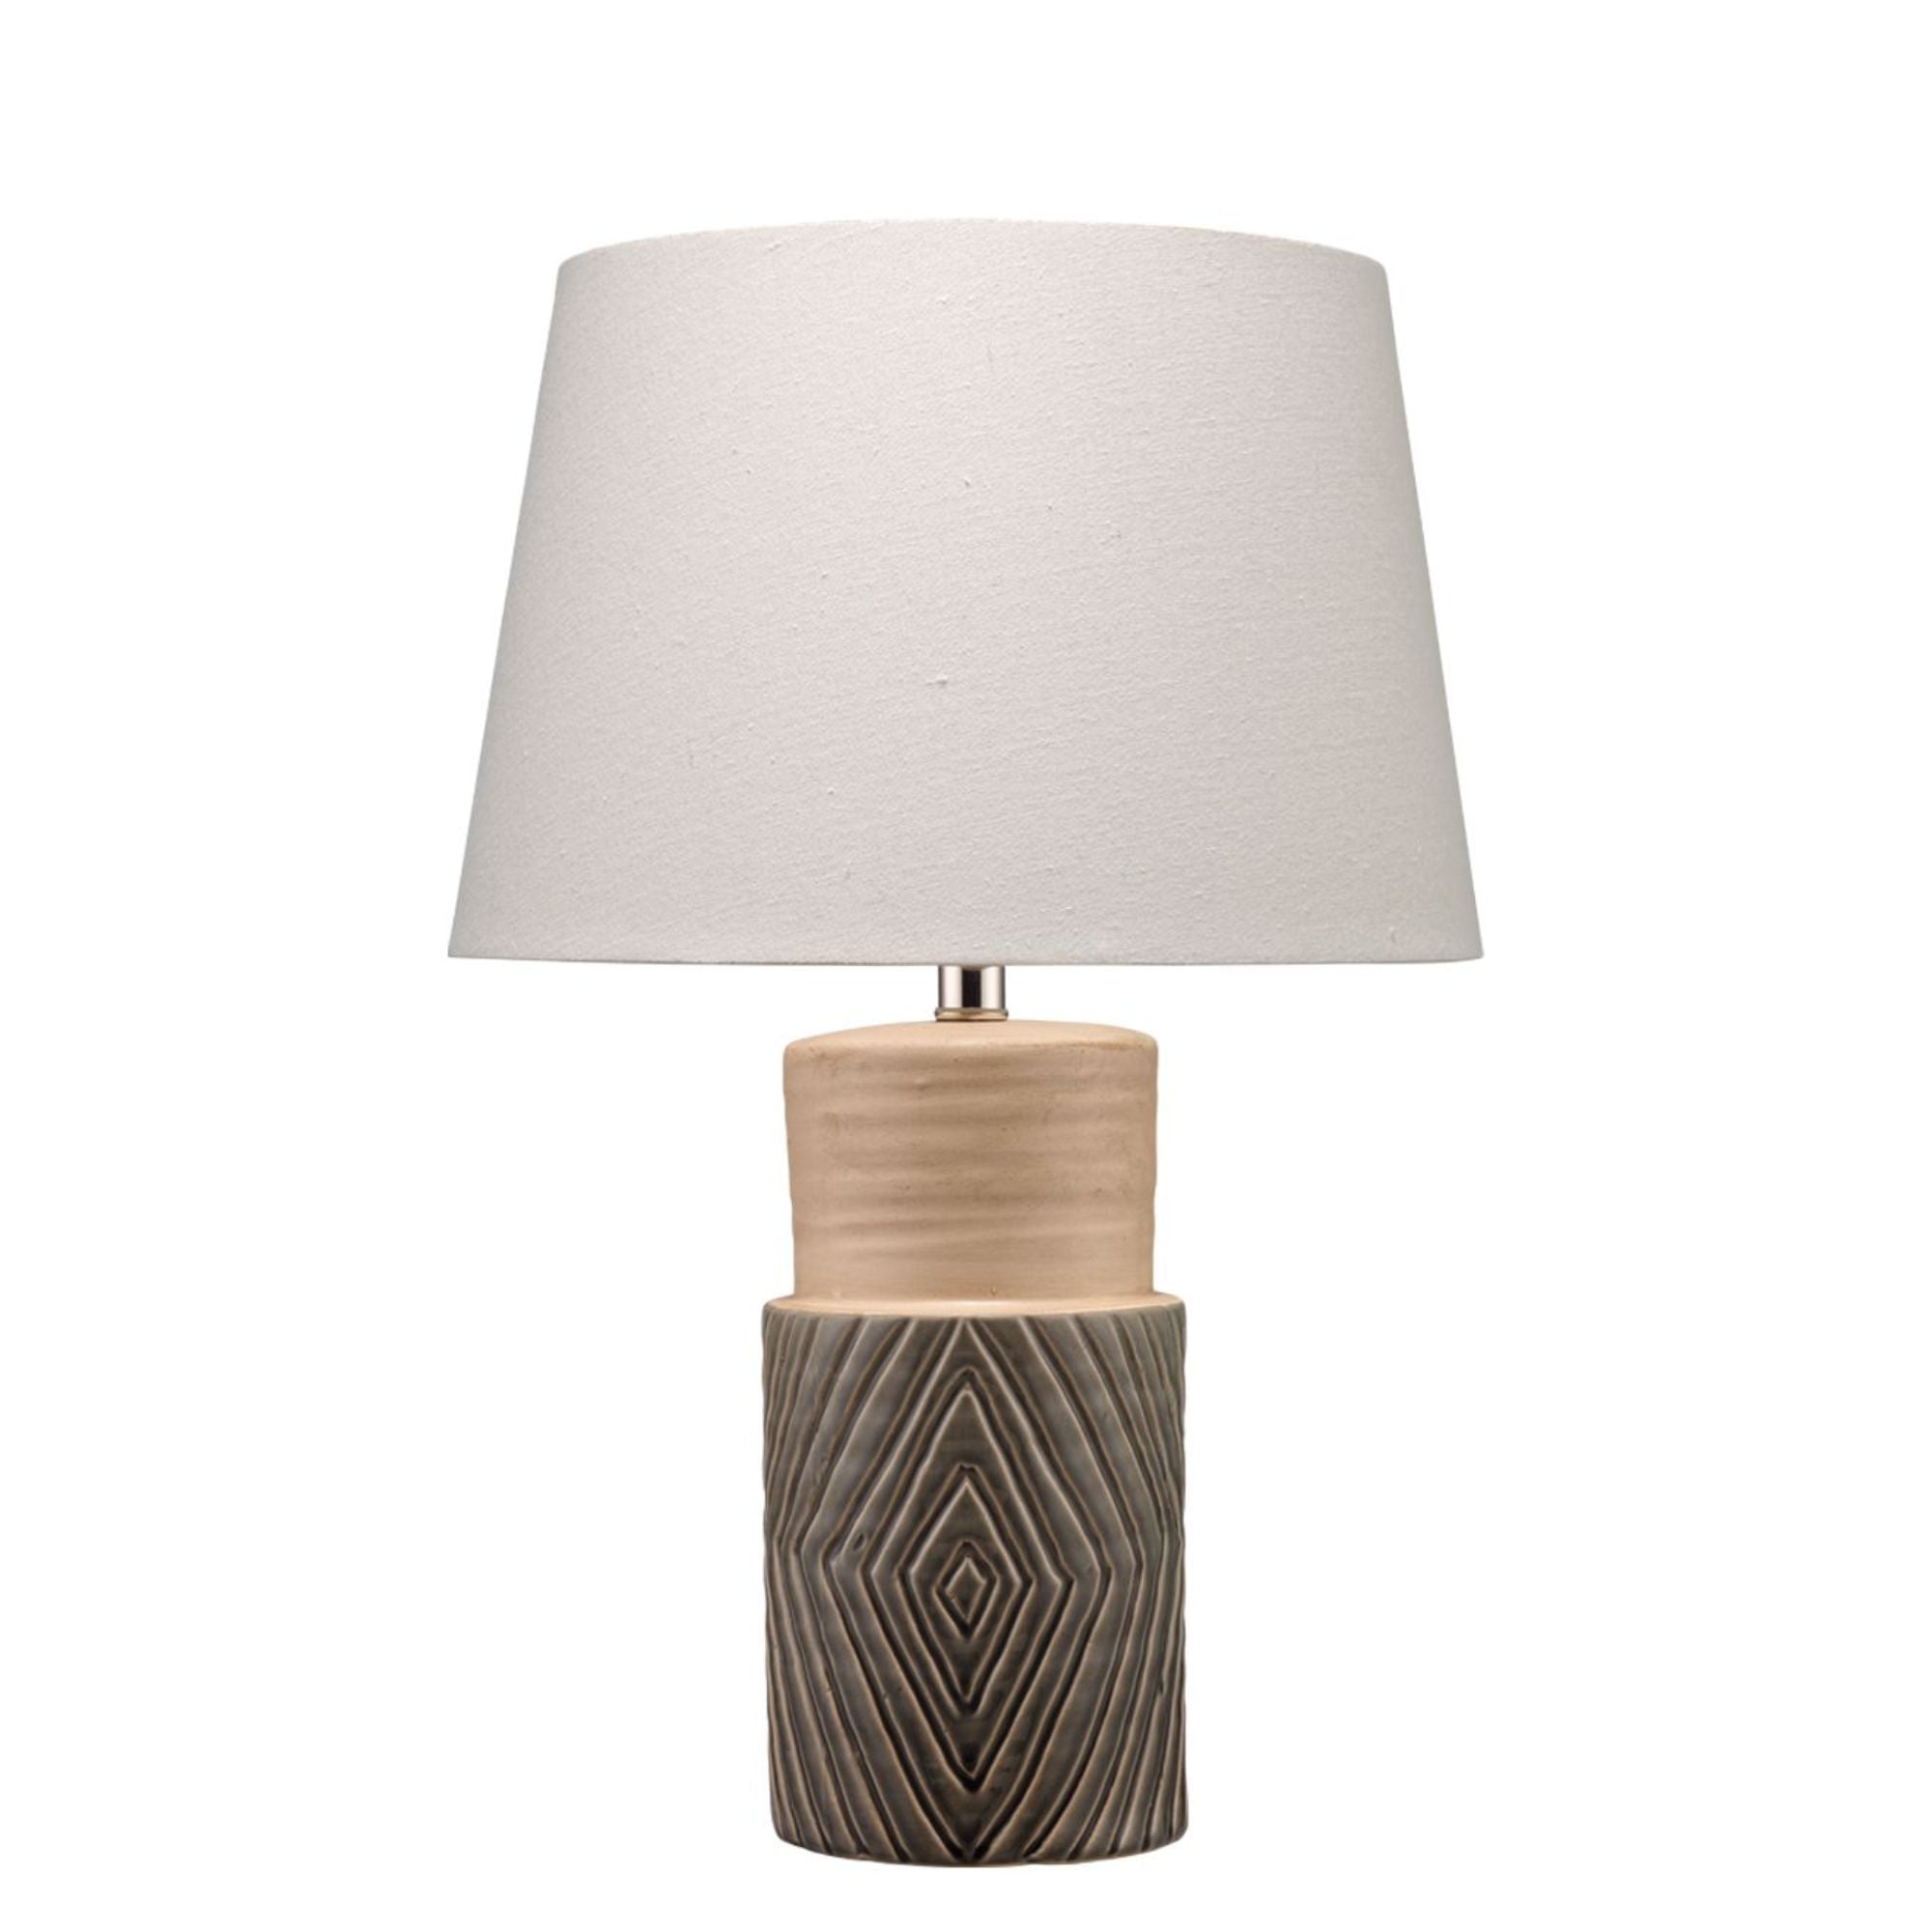 Linen Brown Ripple Ceramic Table Lamp, Ripple Ceramic Table Lamp